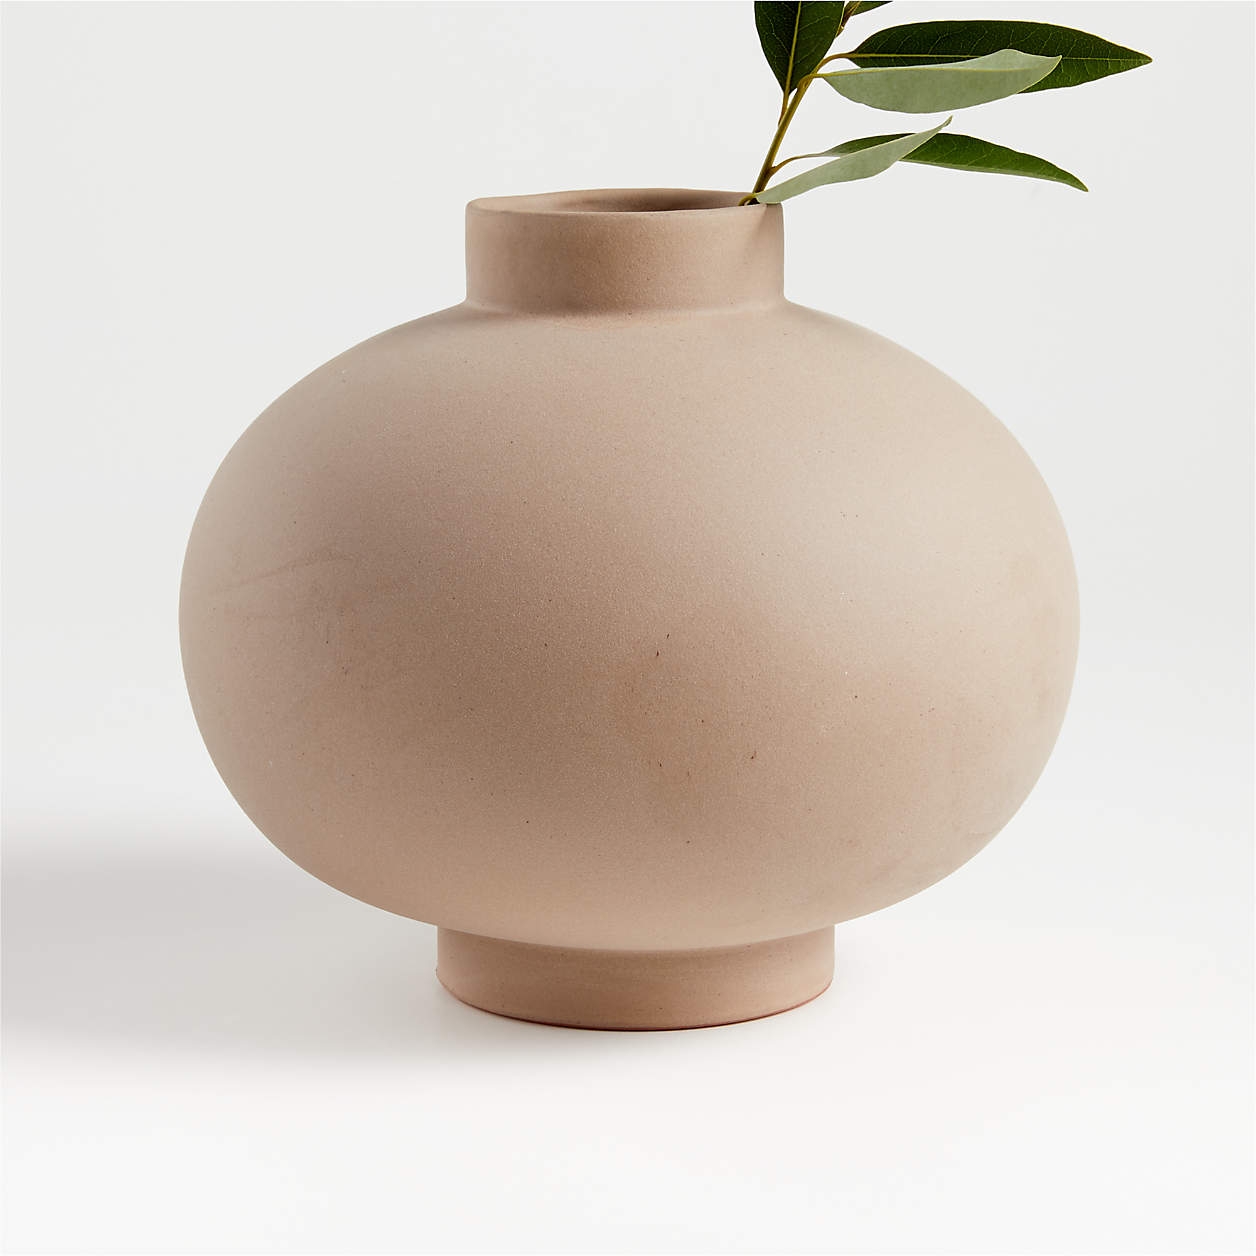 Full Moon Clay Vase - Image 0